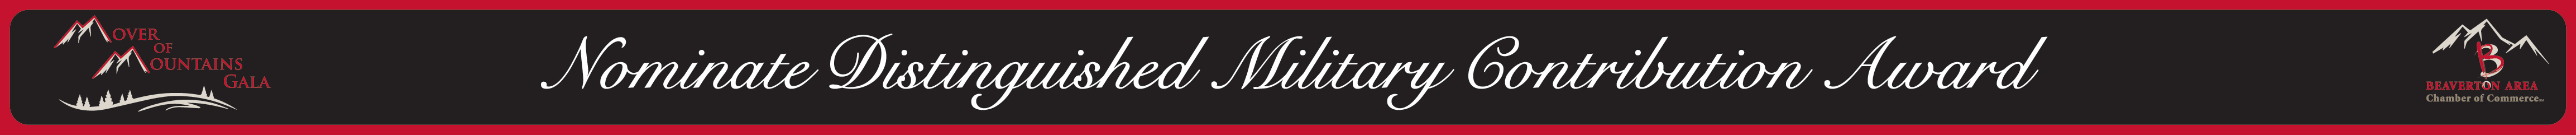 Nominate Distringuished Military Contribution Award Banner